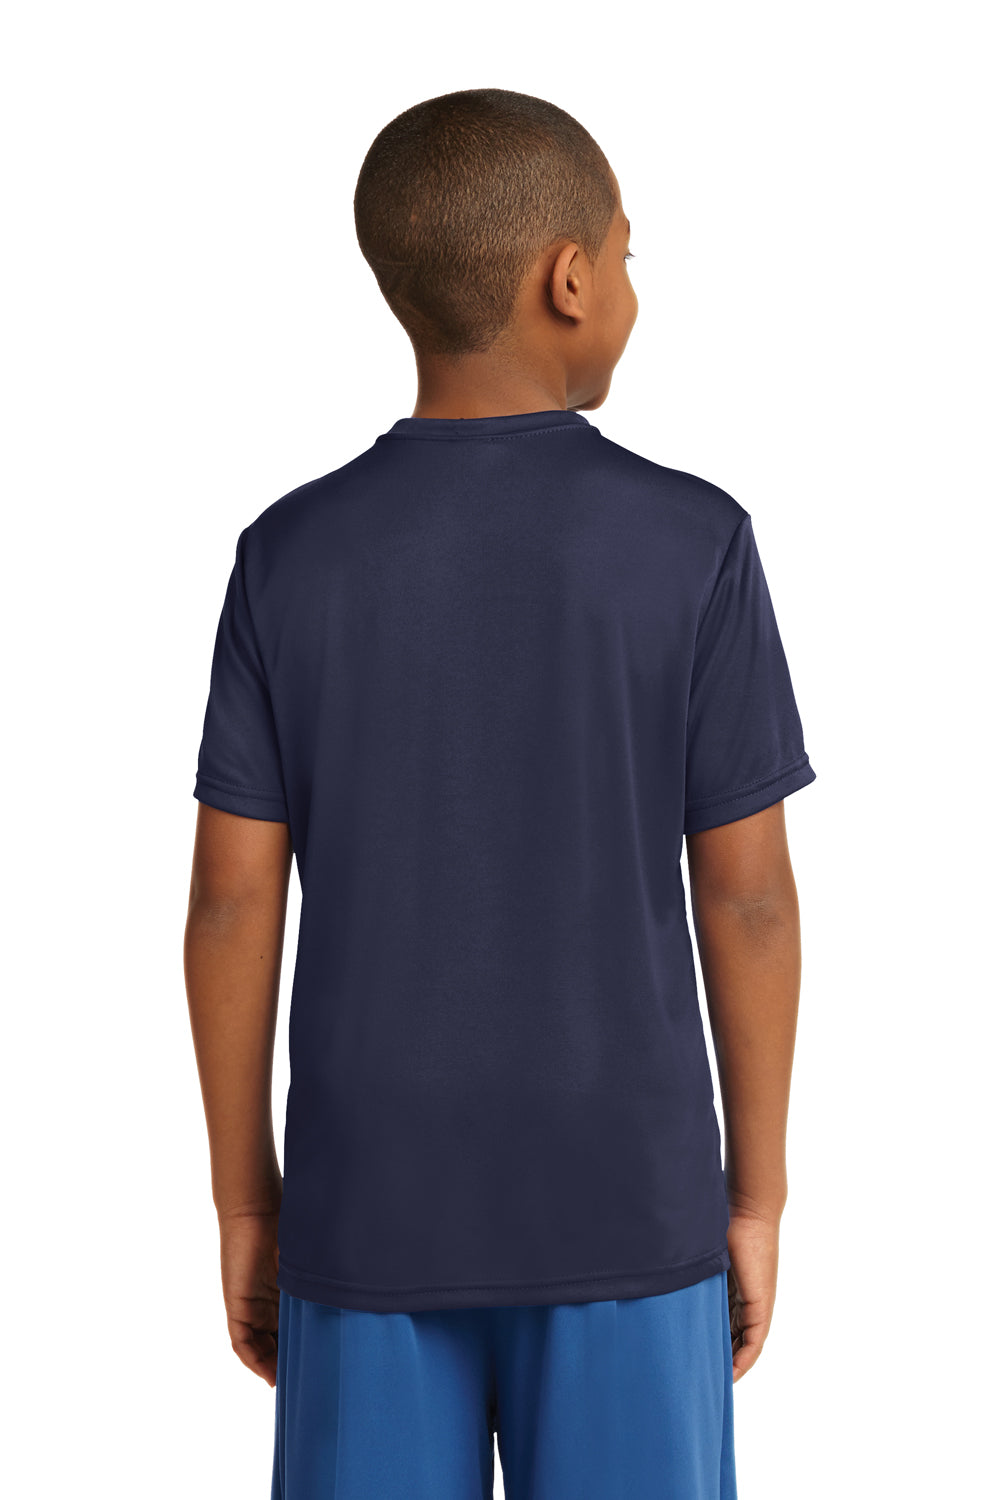 Sport-Tek YST350 Youth Competitor Moisture Wicking Short Sleeve Crewneck T-Shirt Navy Blue Back